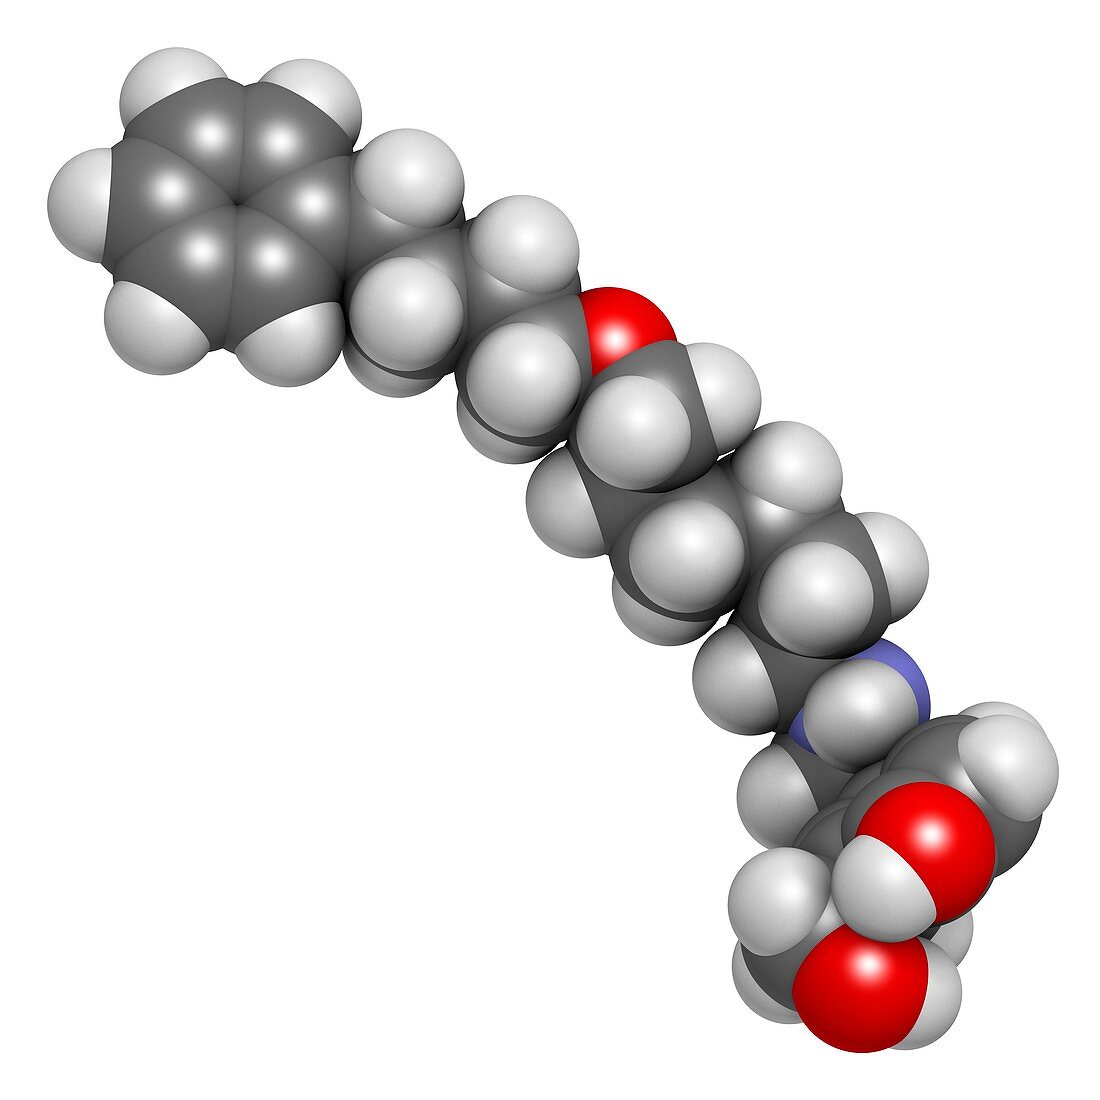 Salmeterol asthma drug molecule